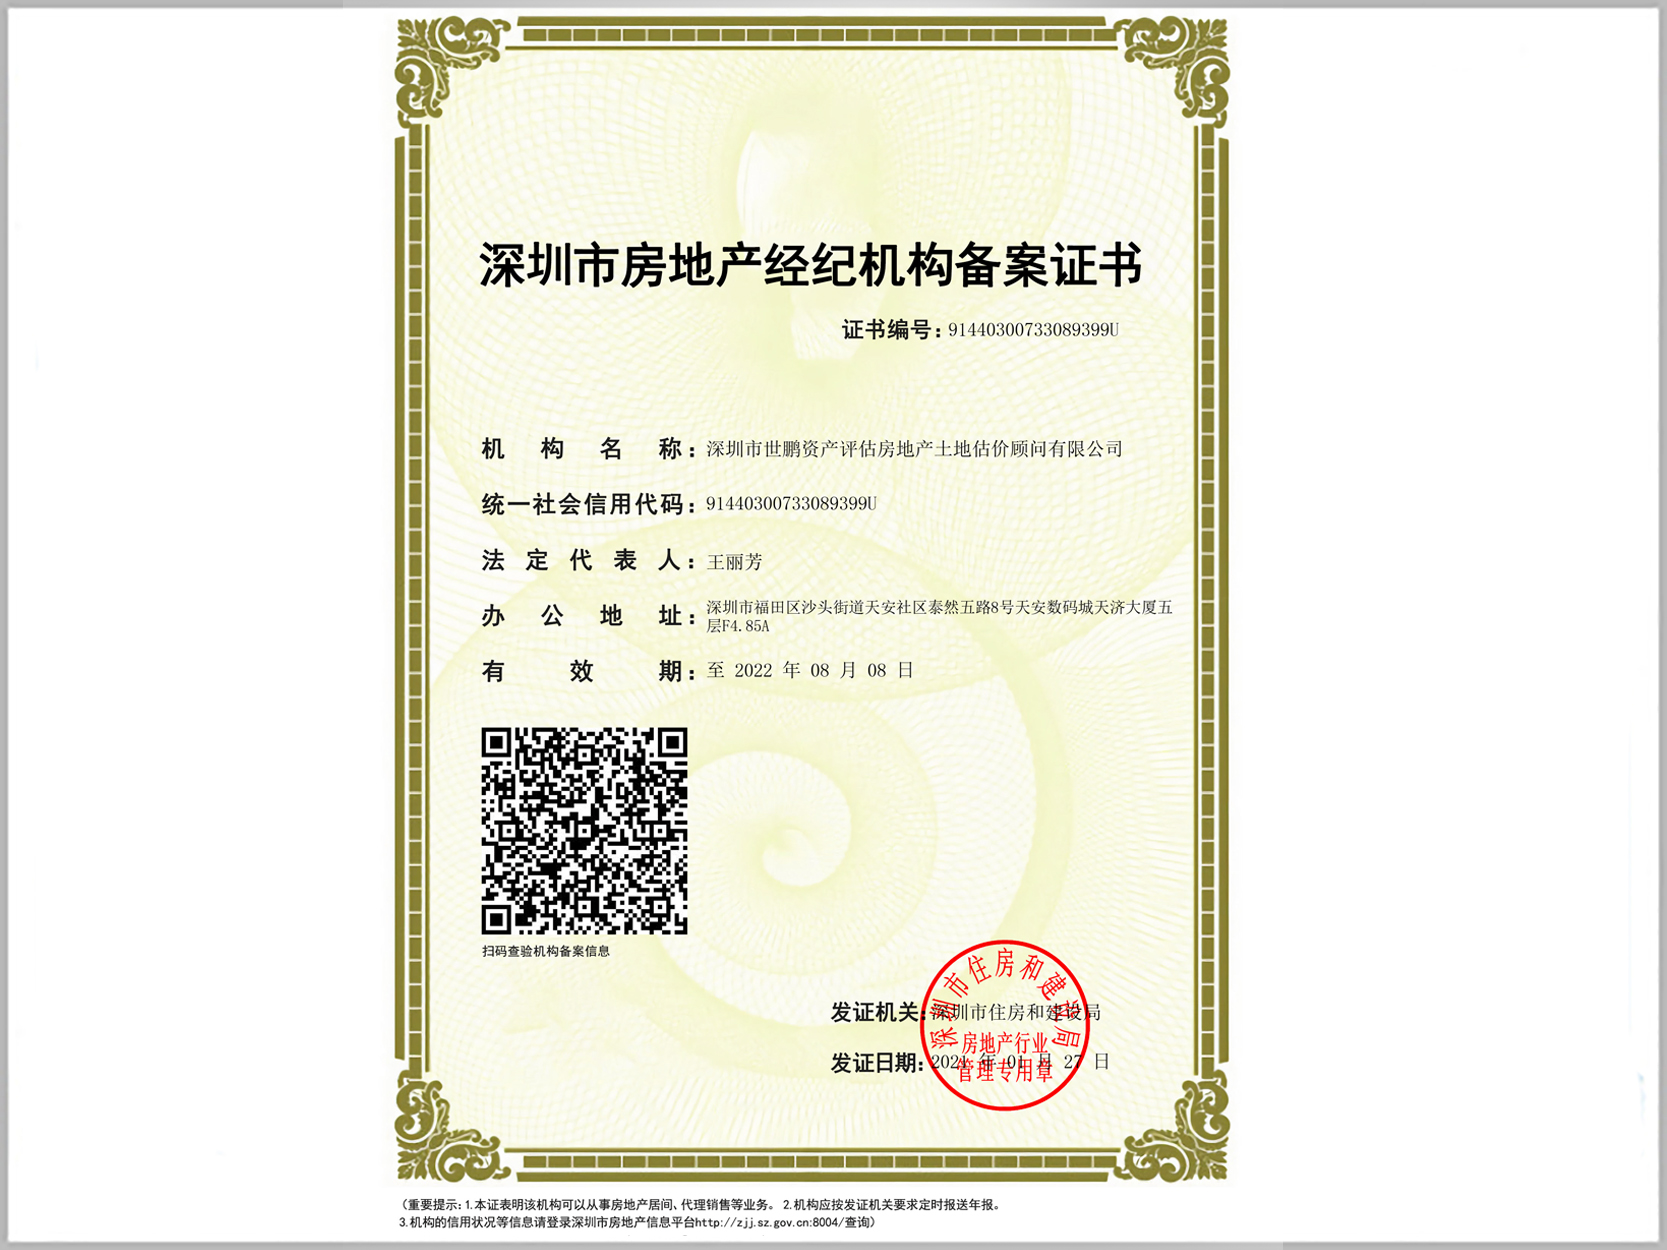 Shenzhen real estate brokerage agency registration certificate